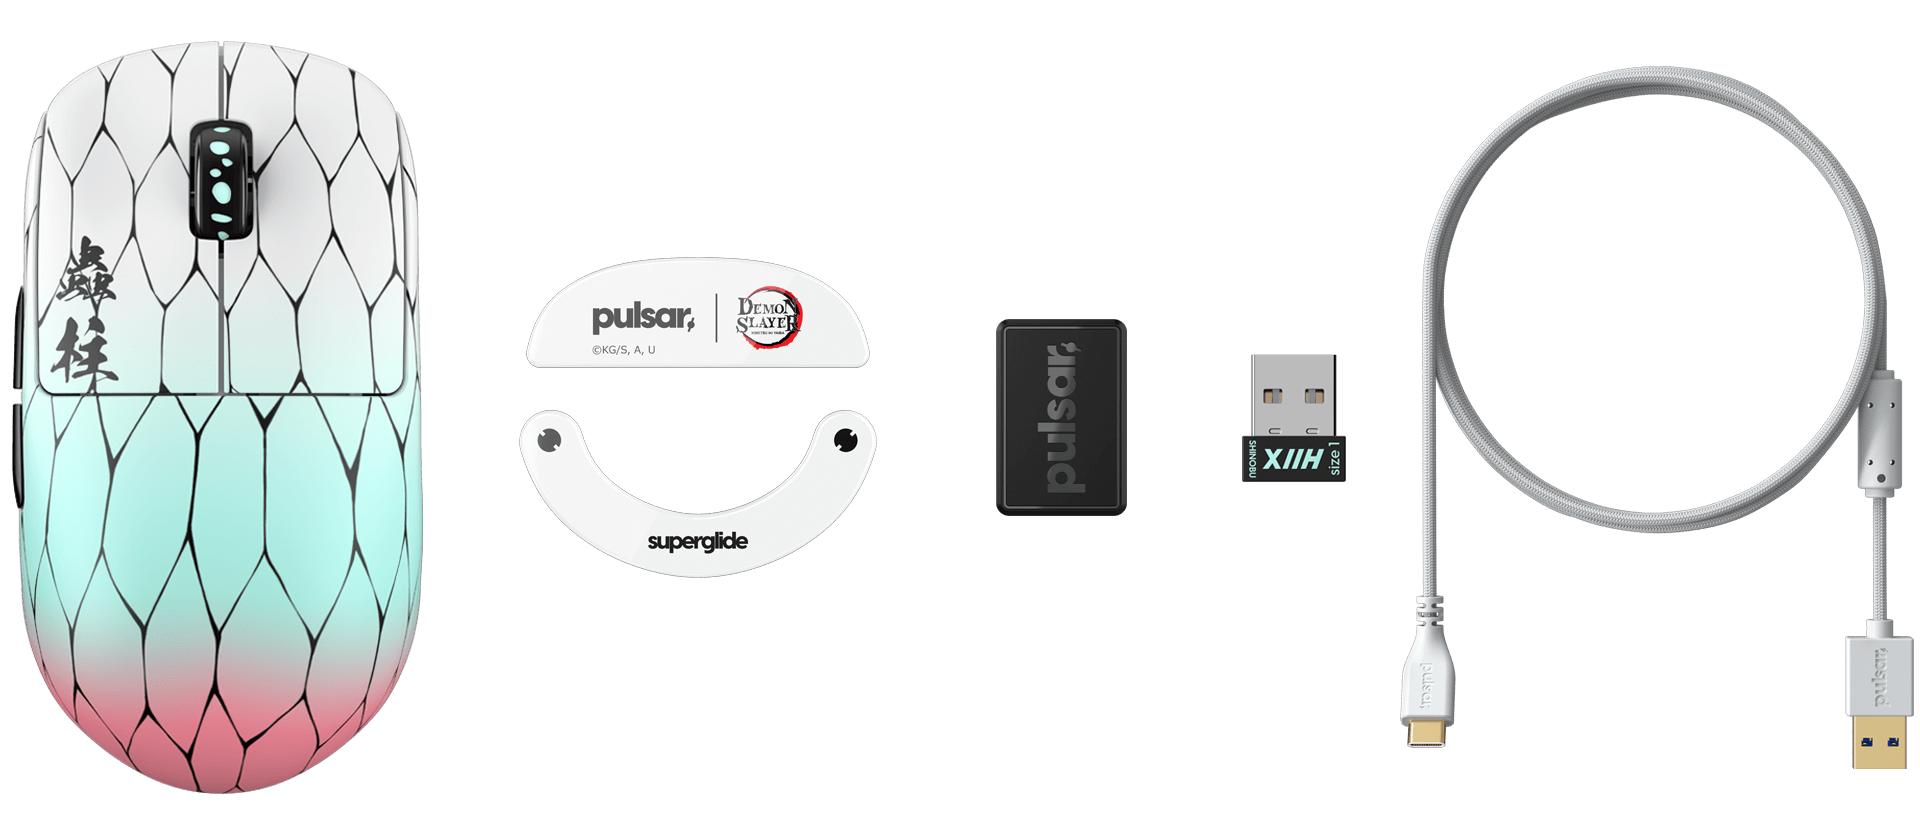 Pulsar X Demon Slayer X2h mini Shinobu Gaming Mouse package content USA